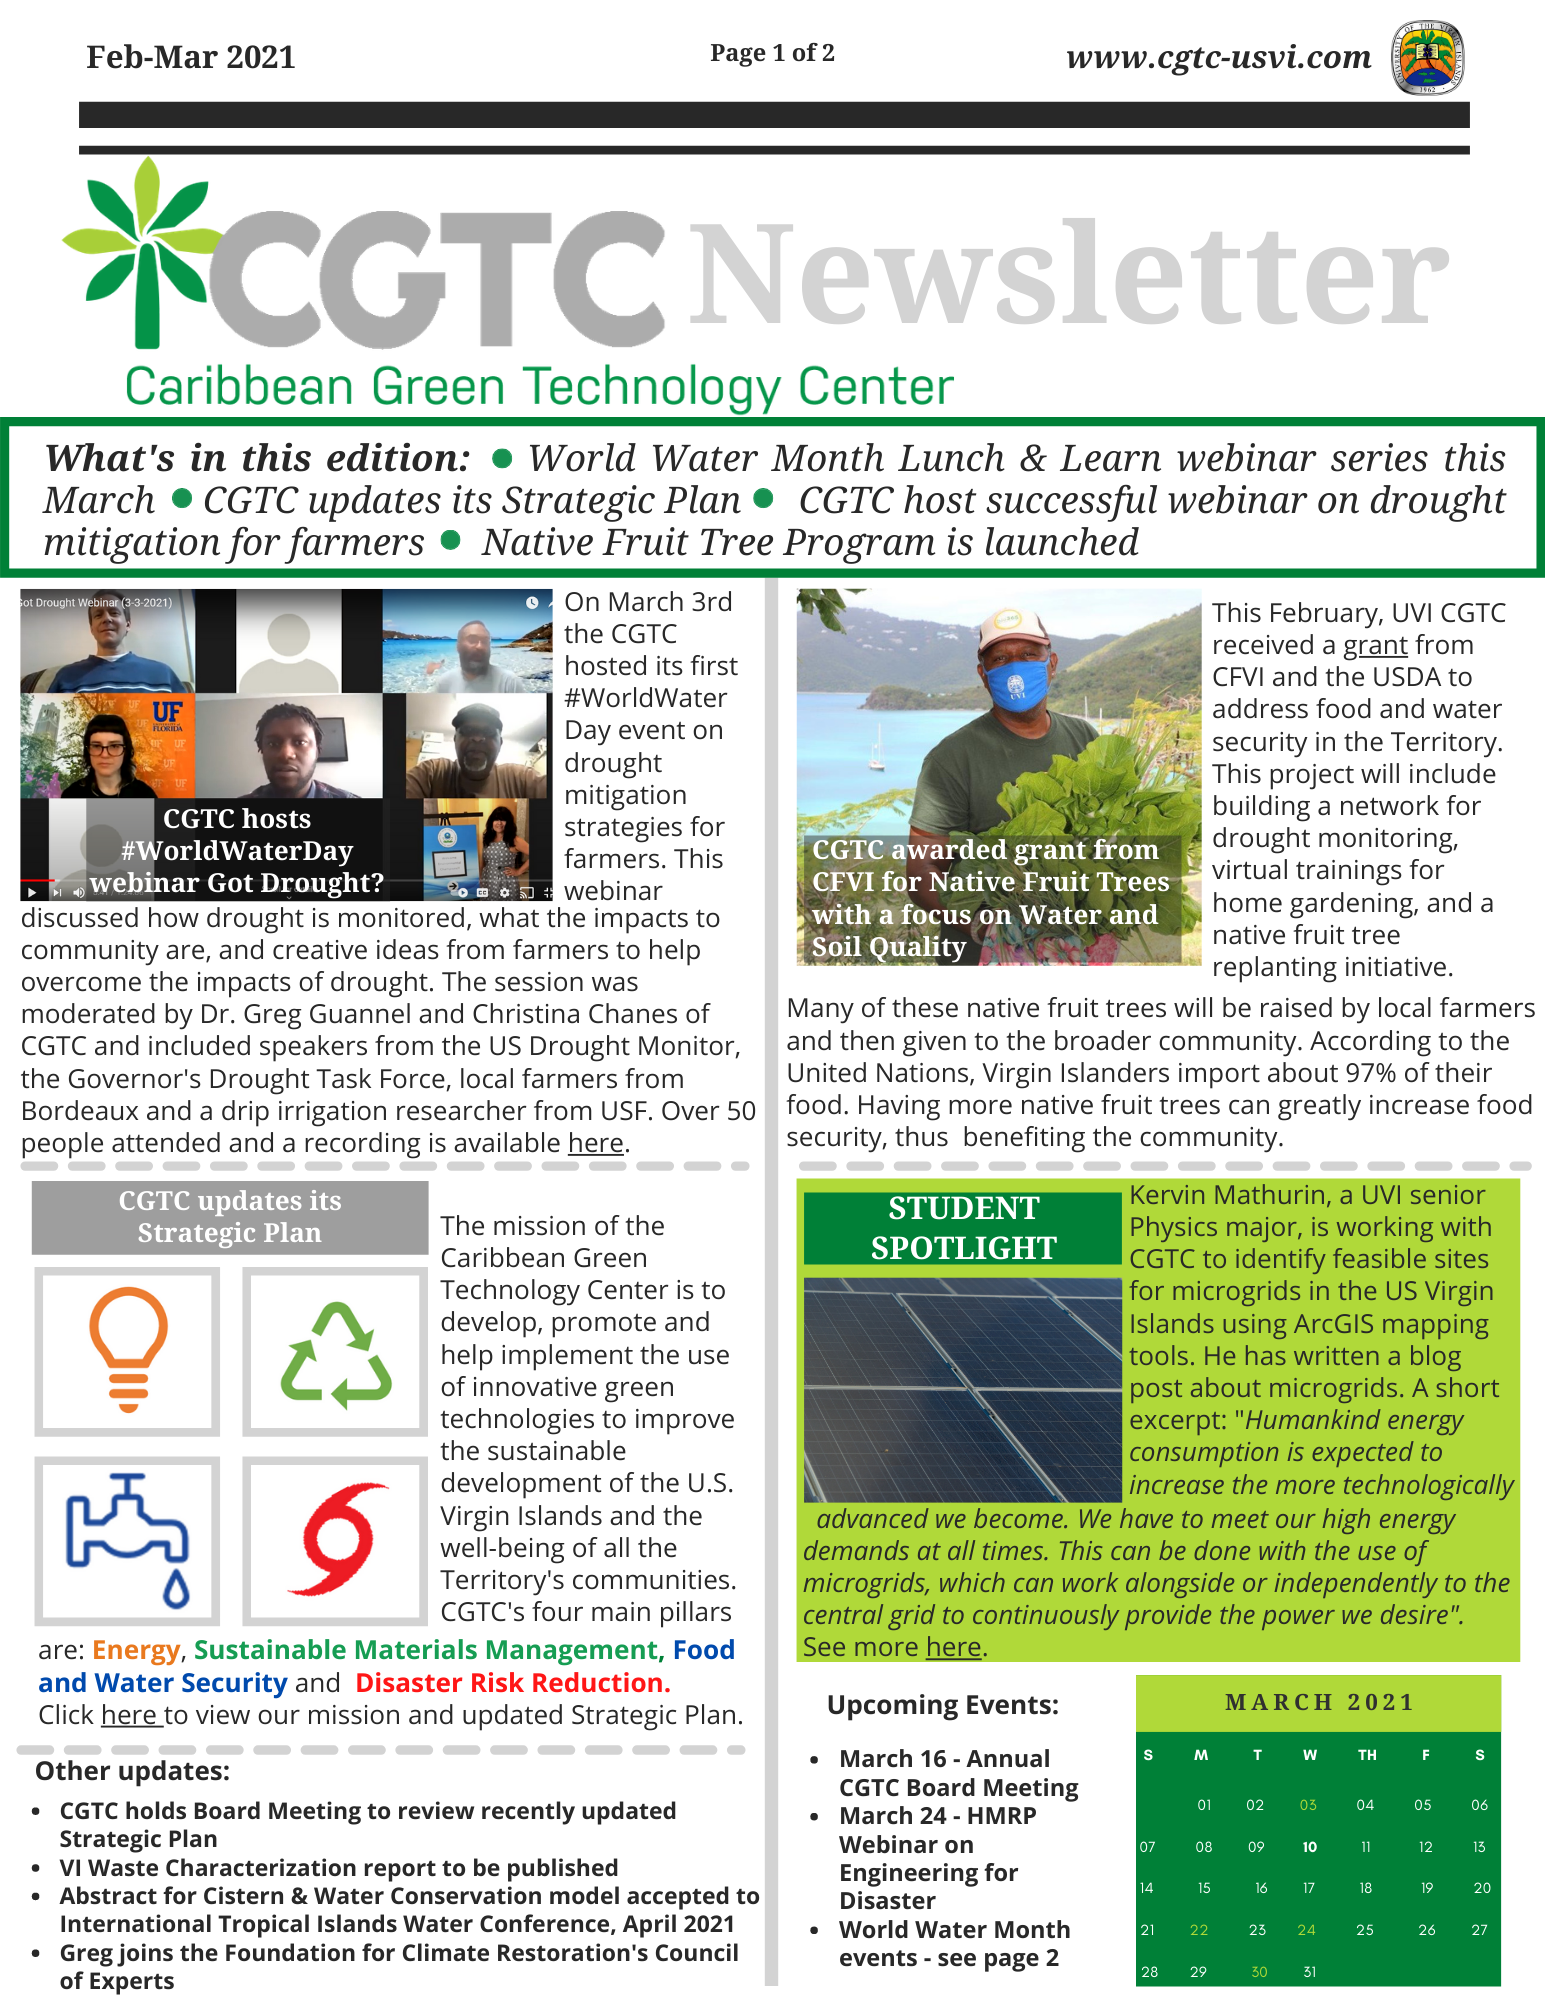 CGTC Newsletter Feb-Mar 2021